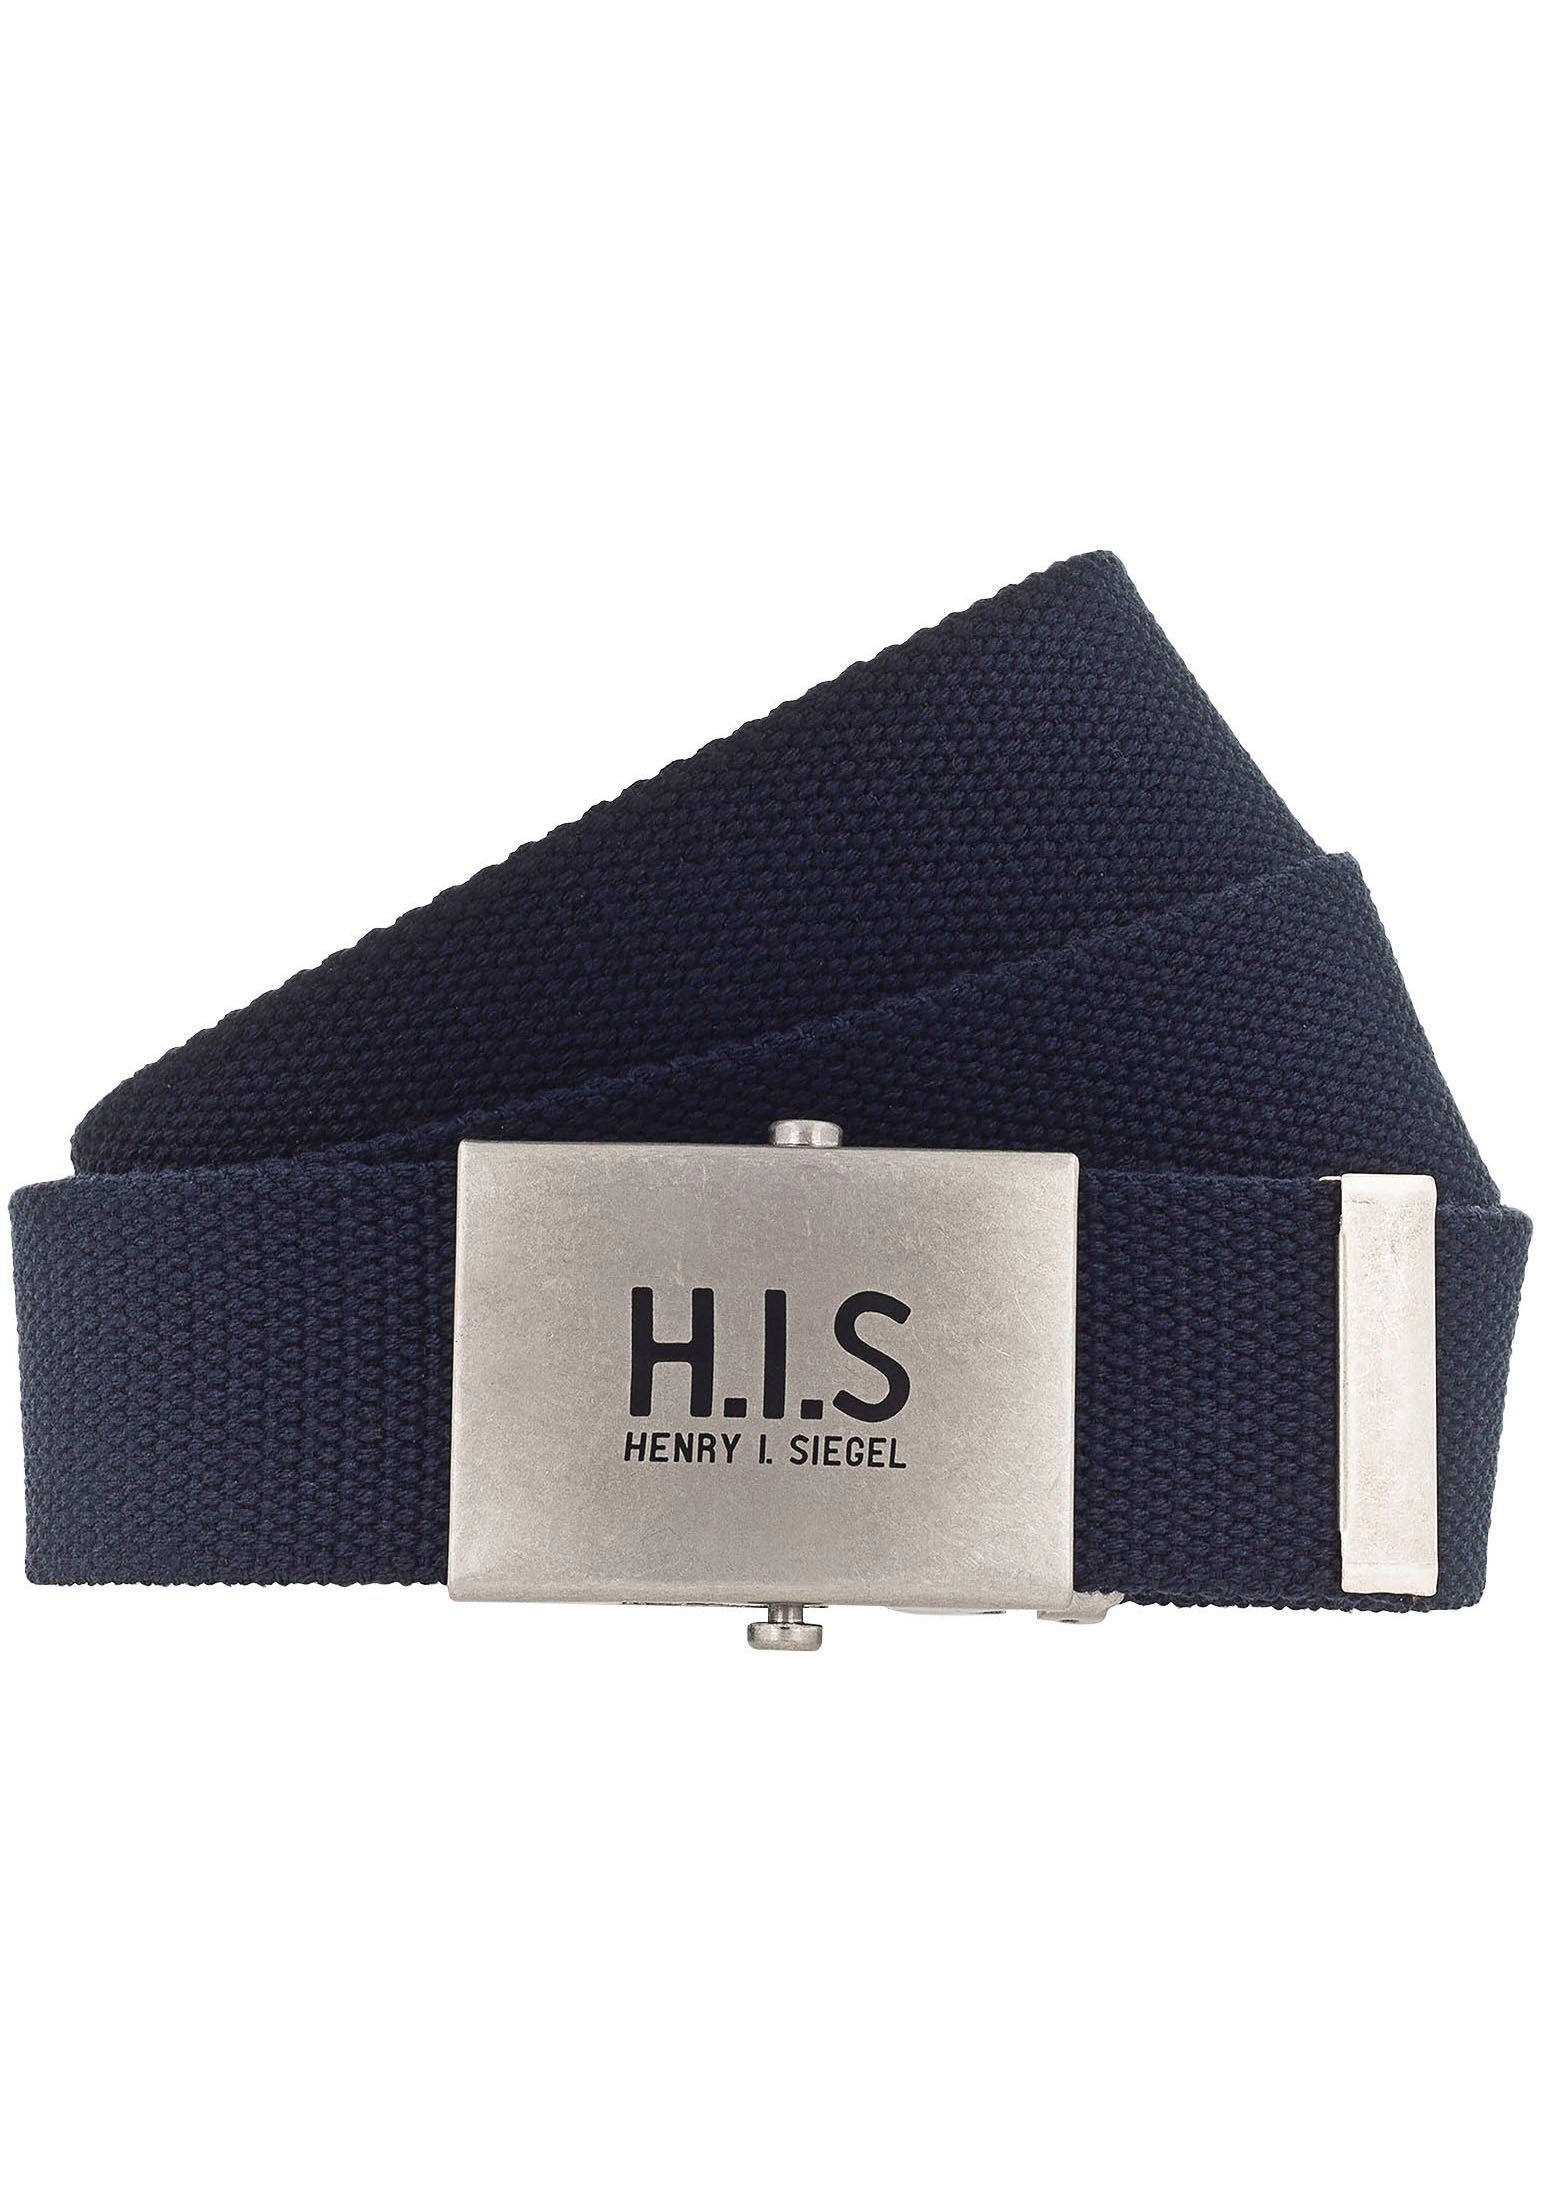 H.I.S Stoffgürtel Bandgürtel mit H.I.S Logo auf der Koppelschließe navy | Stoffgürtel